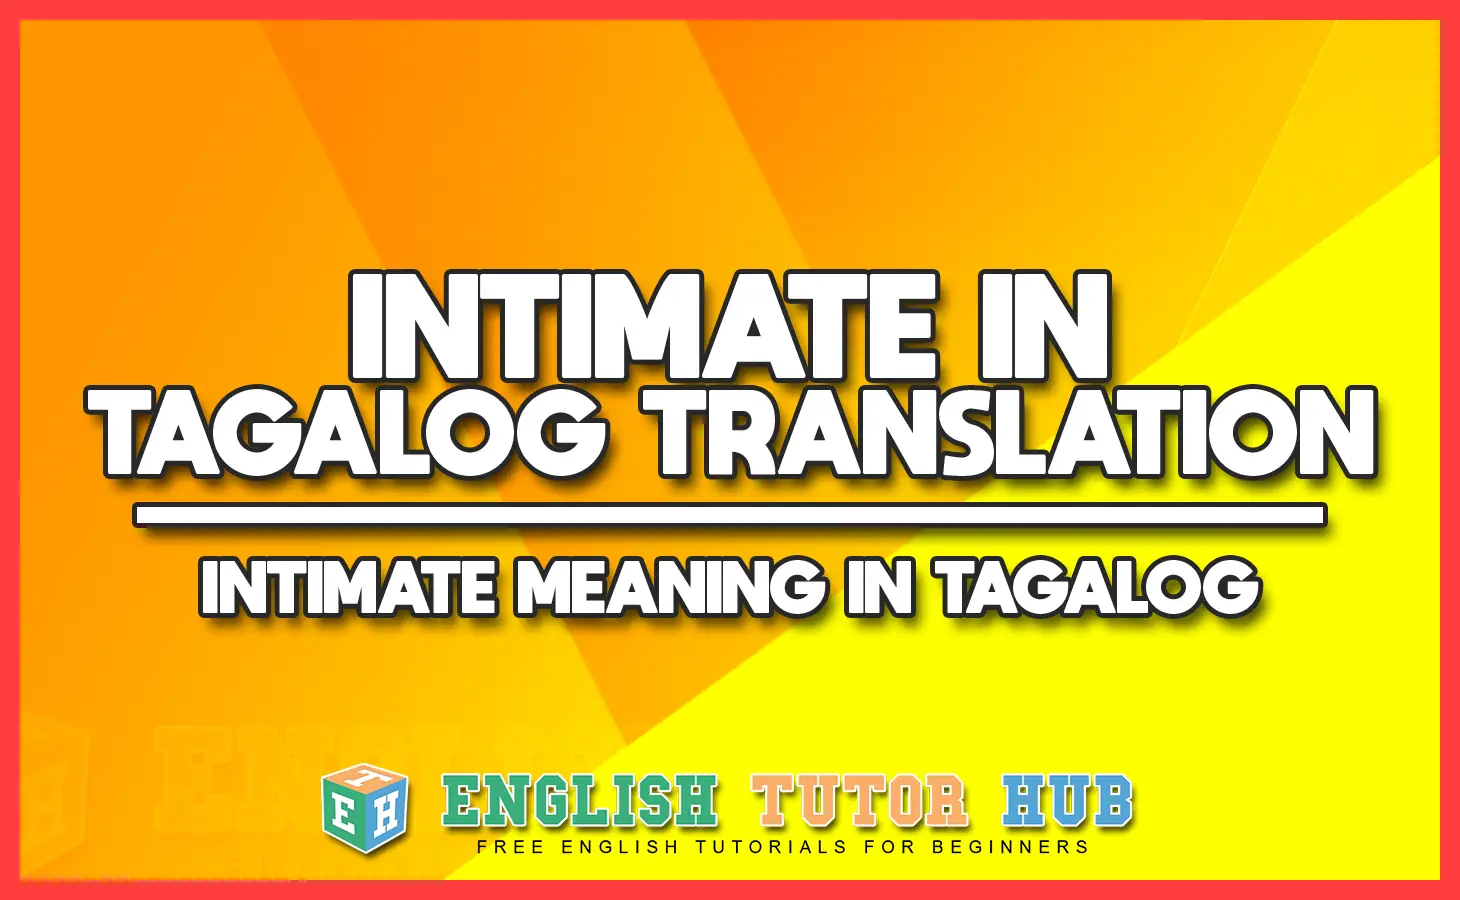 INTIMATE IN TAGALOG TRANSLATION